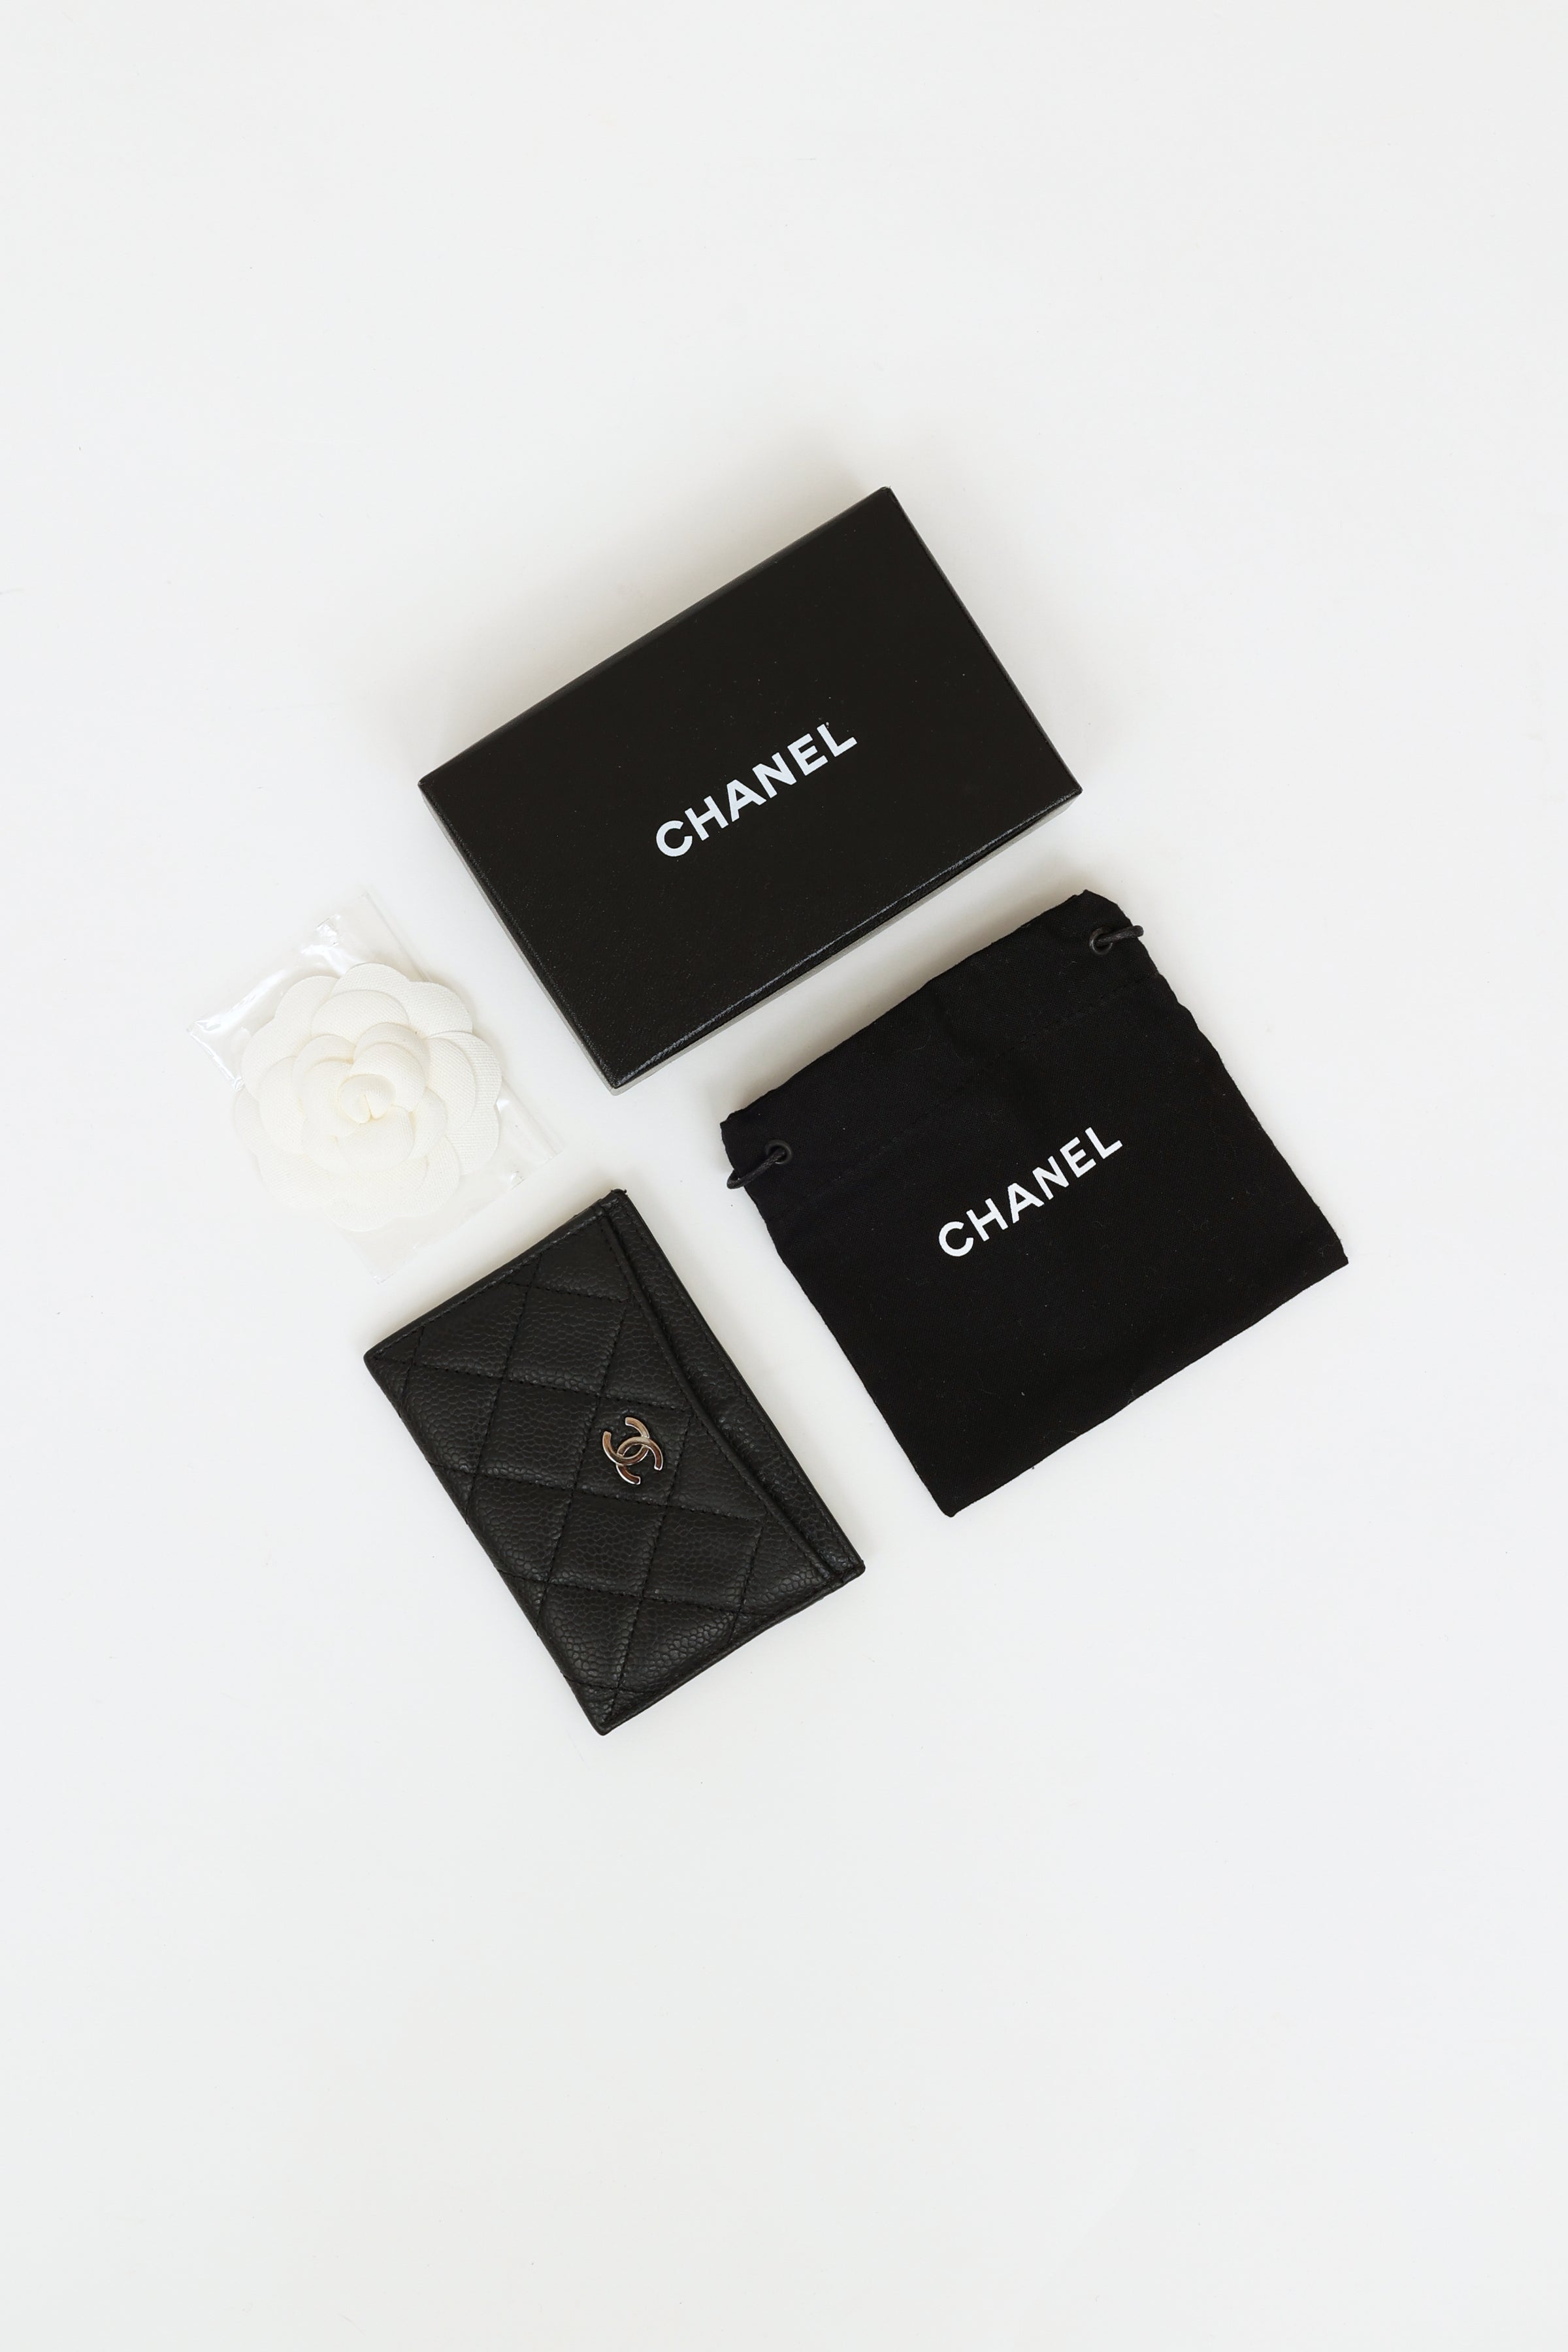 CHANEL black caviar card holder ⭕️Available now⭕️ 零錢卡包現貨 #mt_readystock